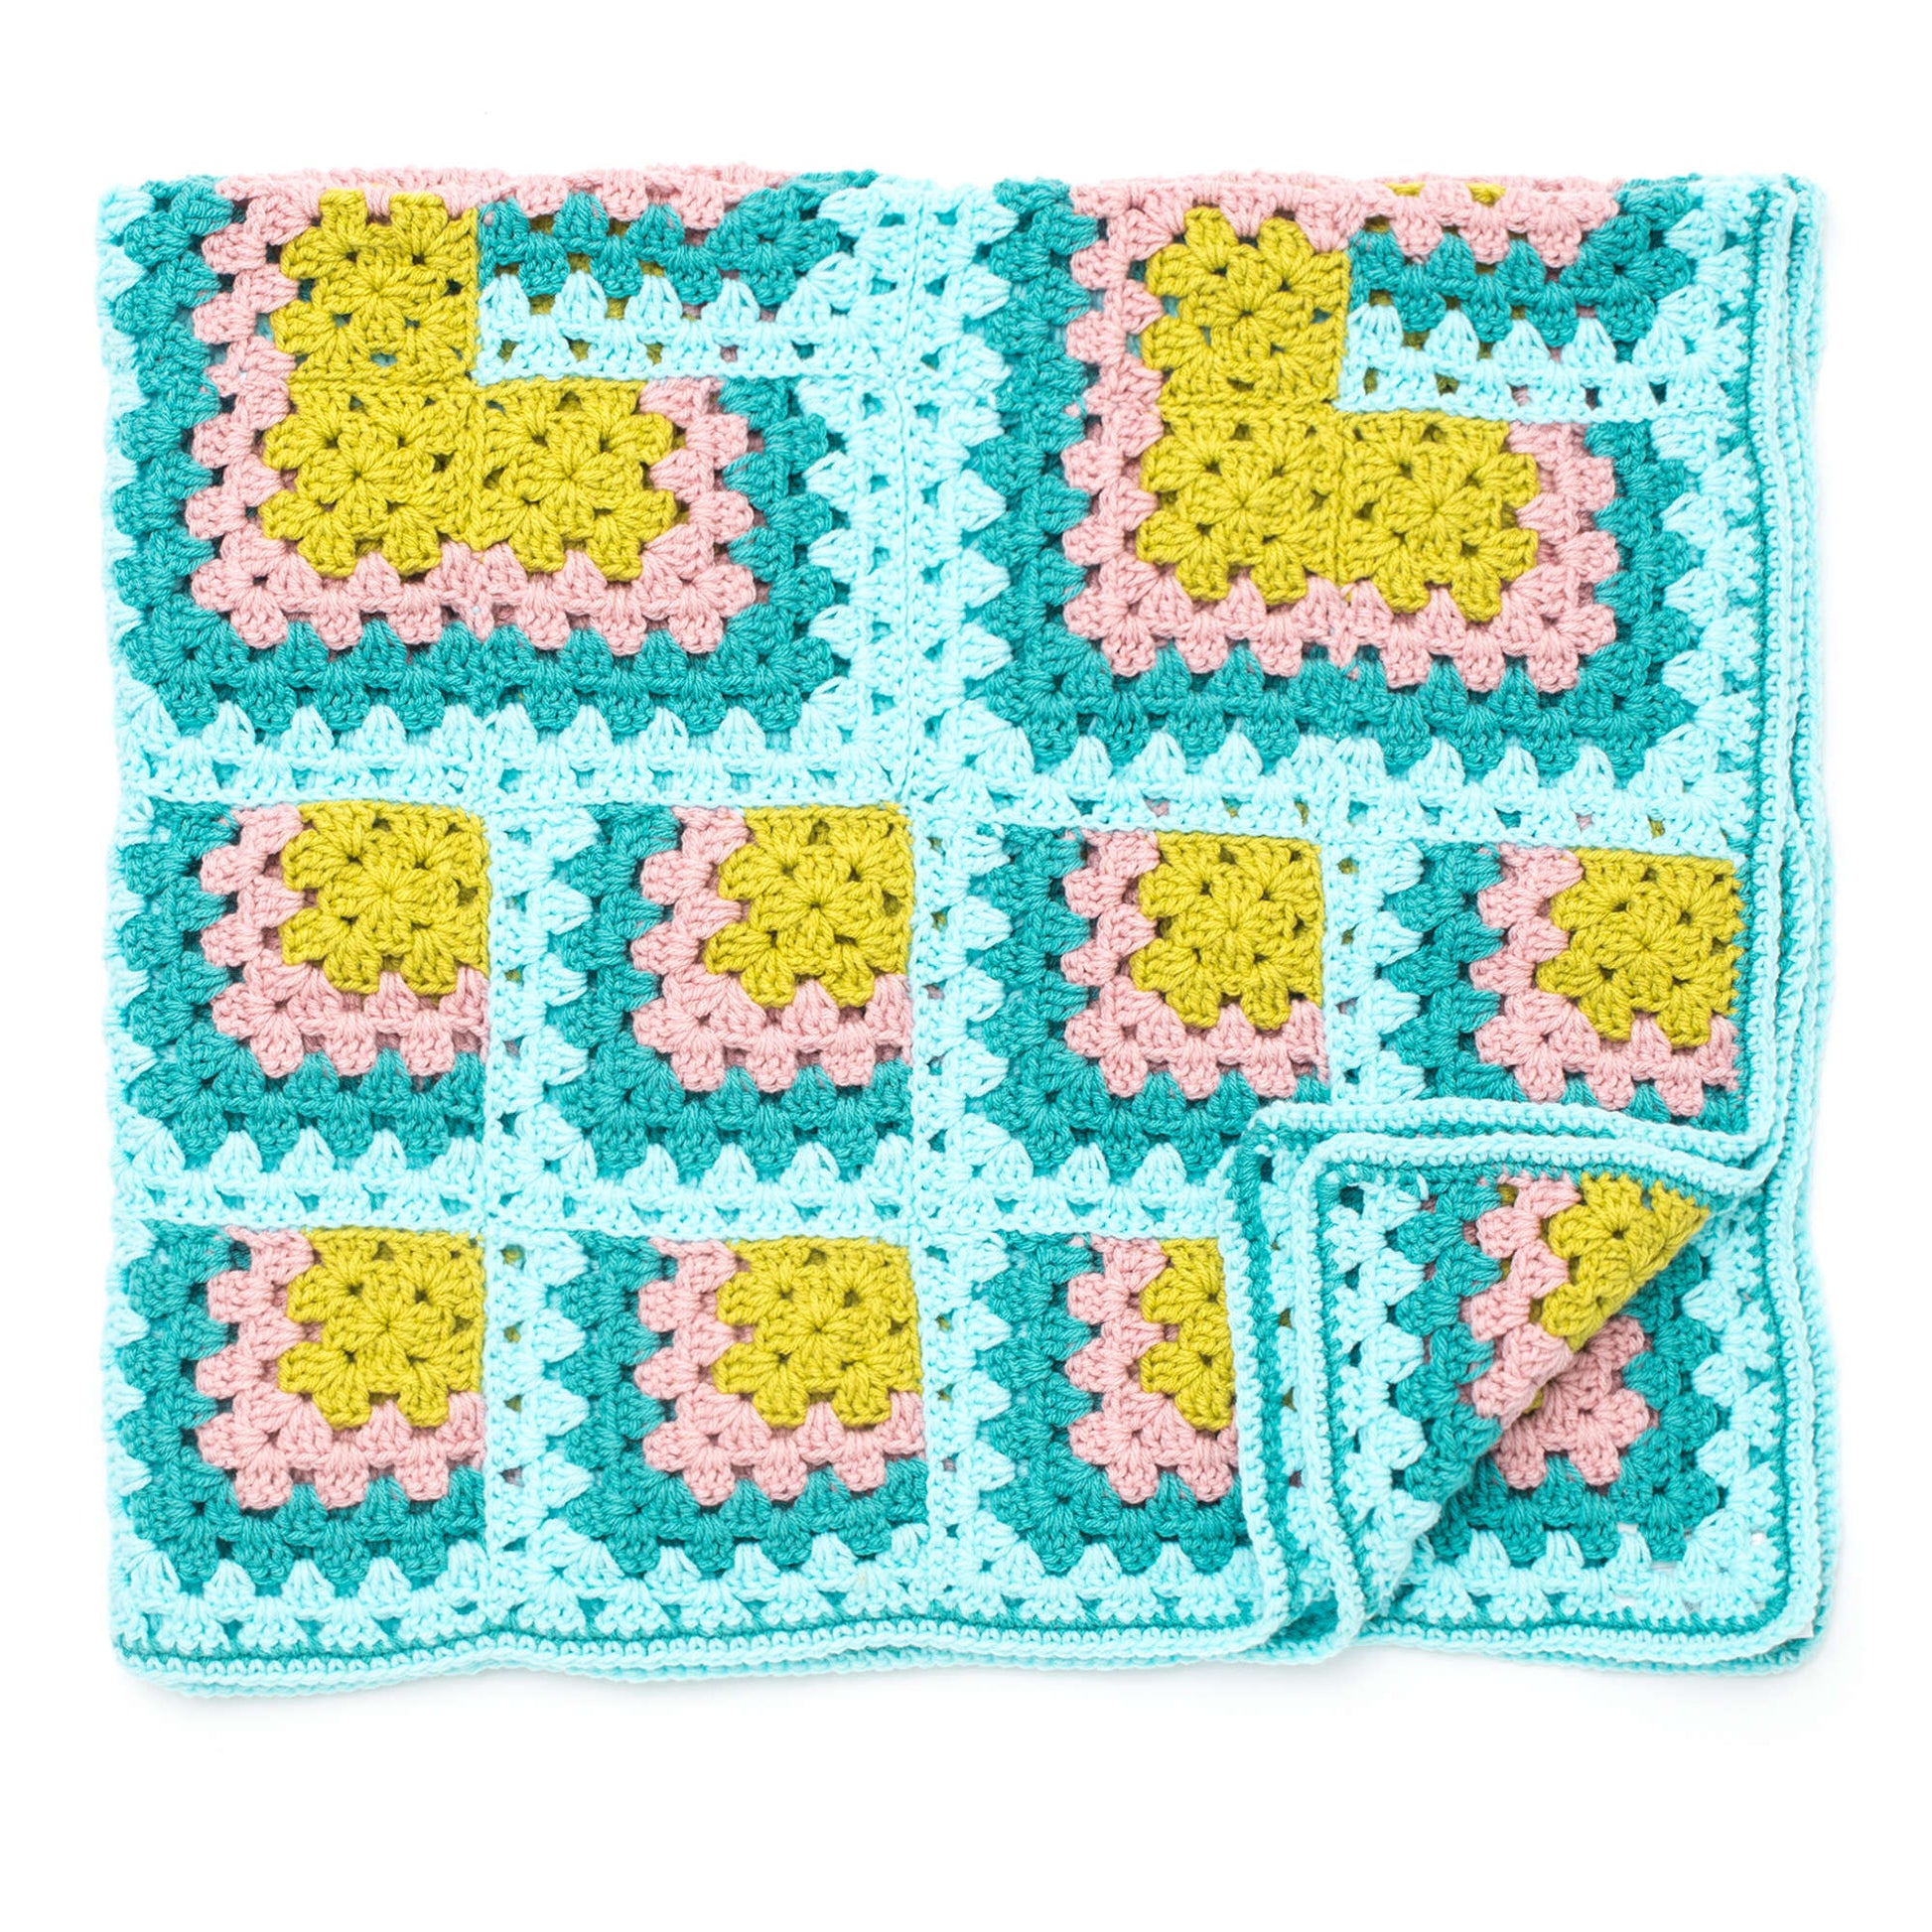 Bernat Mitered Granny Square Throw Crochet Blanket made in Bernat Super Value yarn